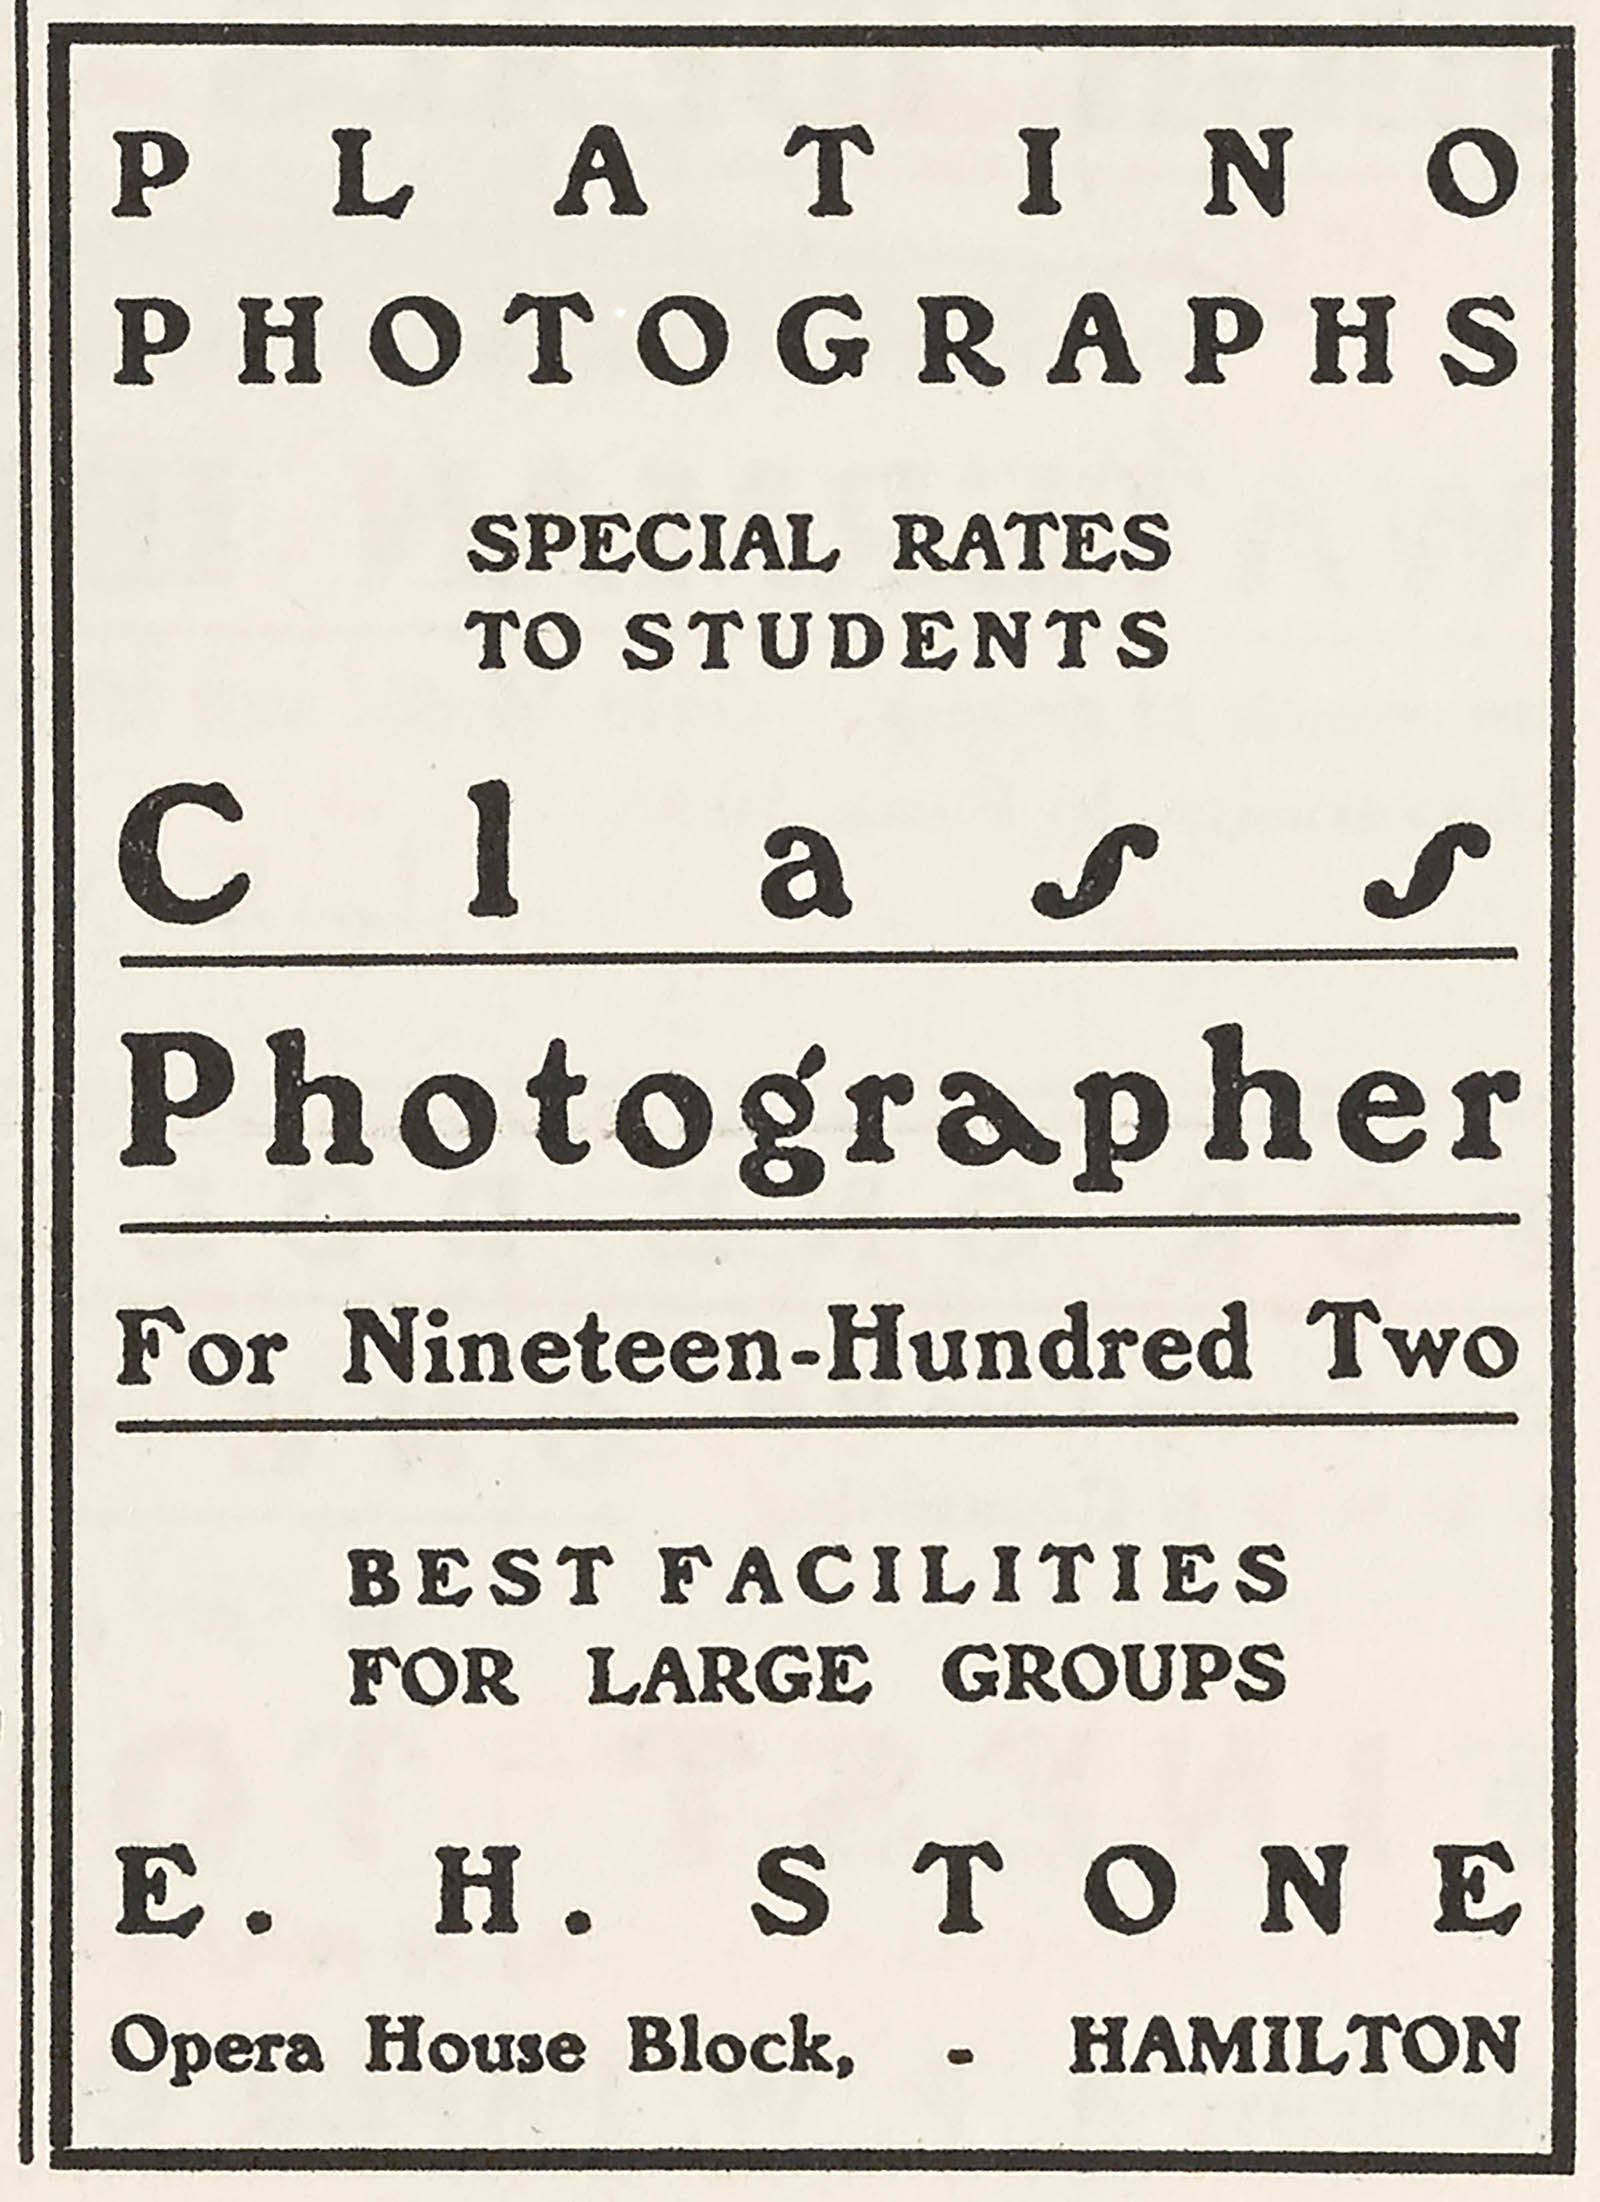 Advertisement in 1902 Salmagundi yearbook